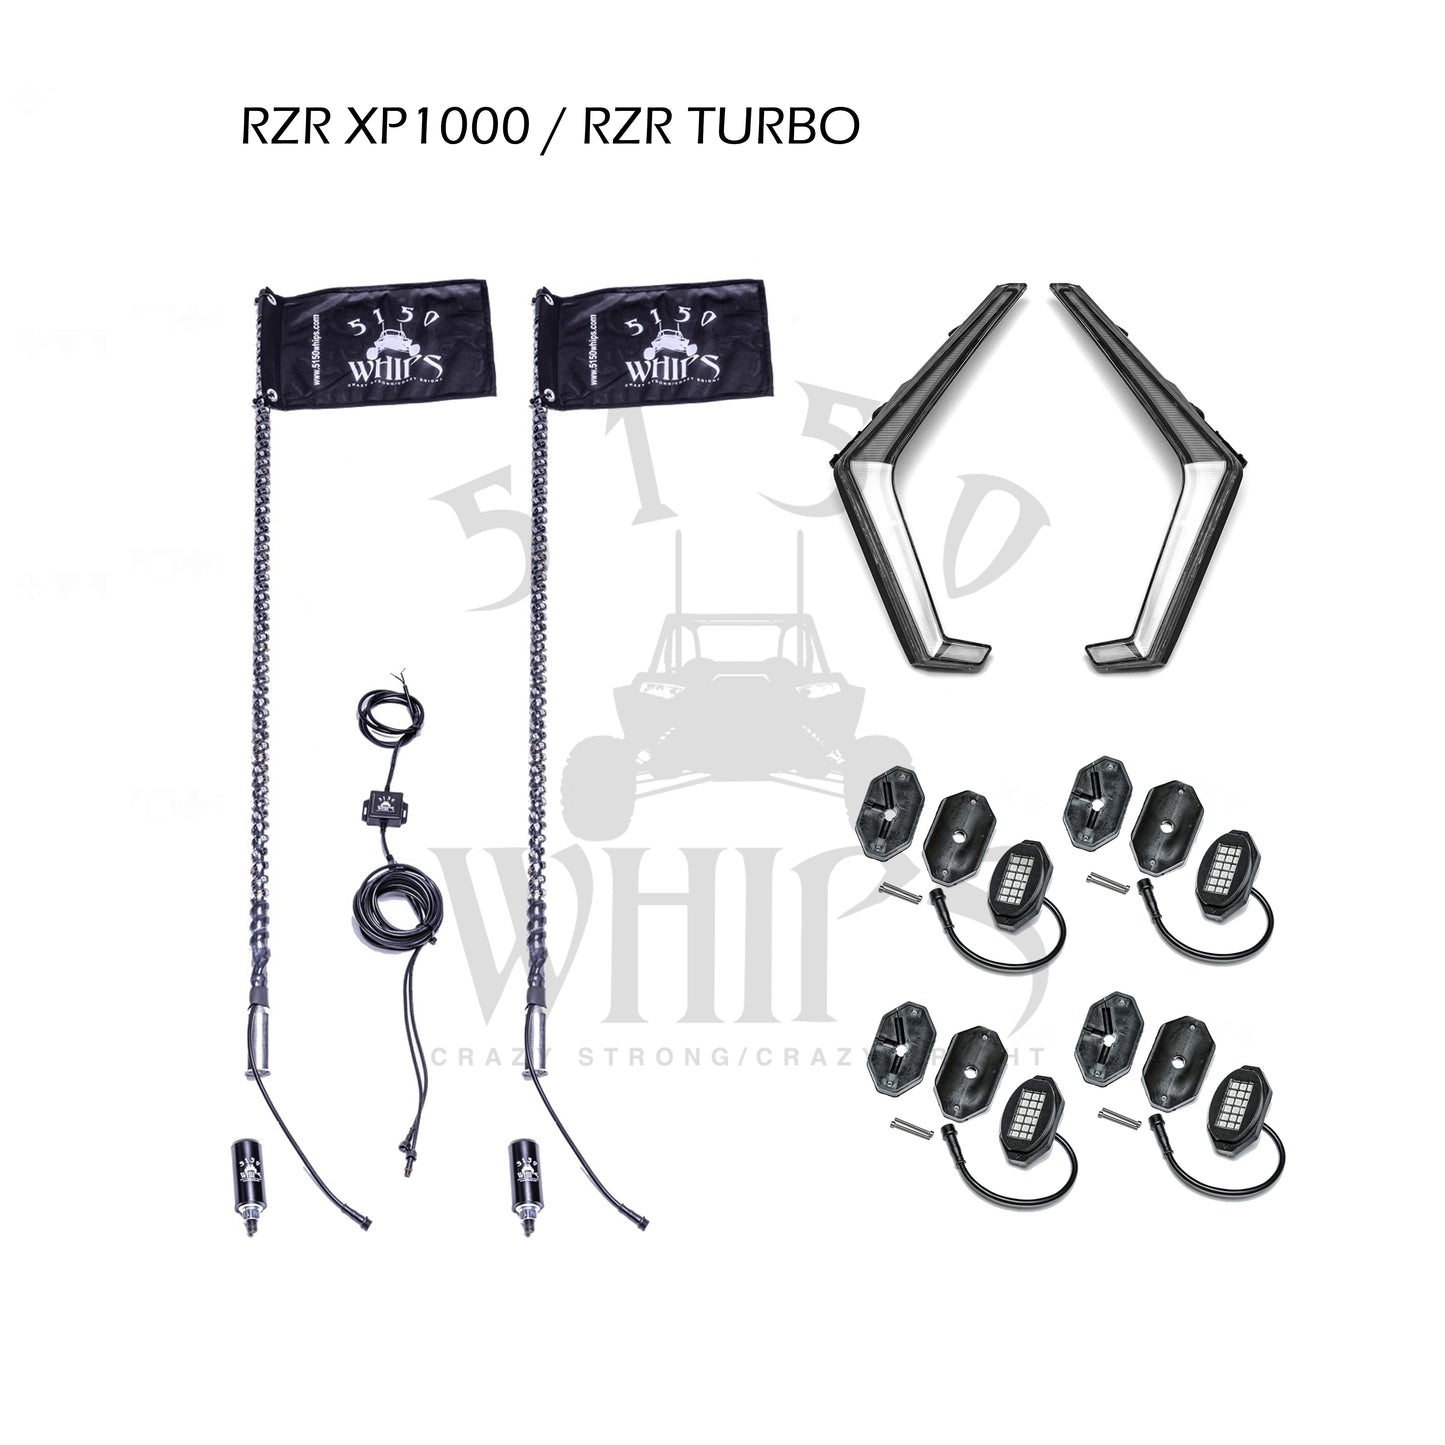 RZR XP1000 / Turbo Lighting Kit